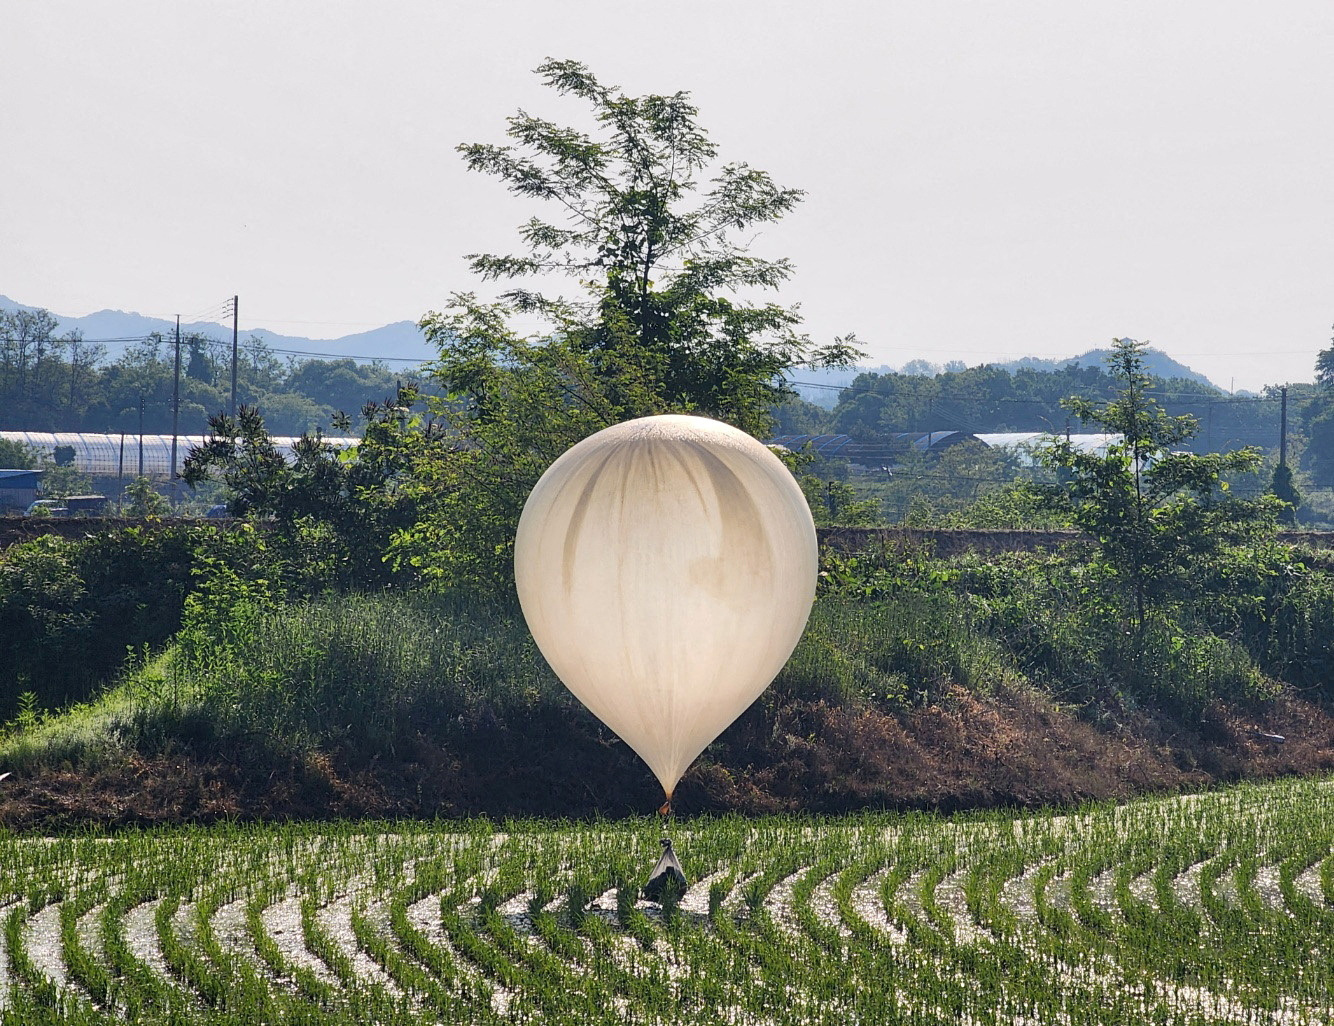 image North Korea sends 600 more trash balloons over border, South says